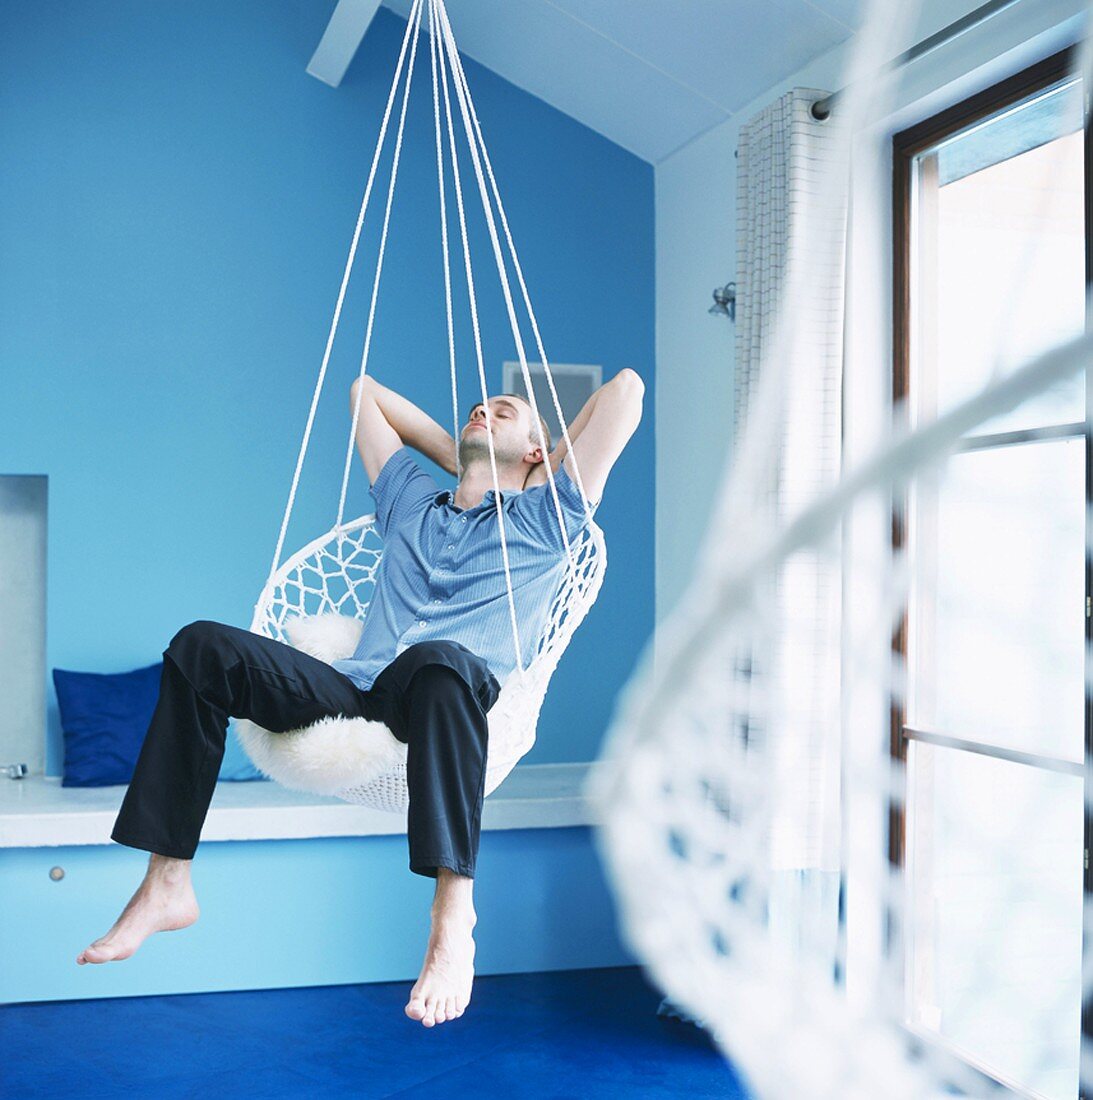 Man relaxing in hanging chair in blue bedroom